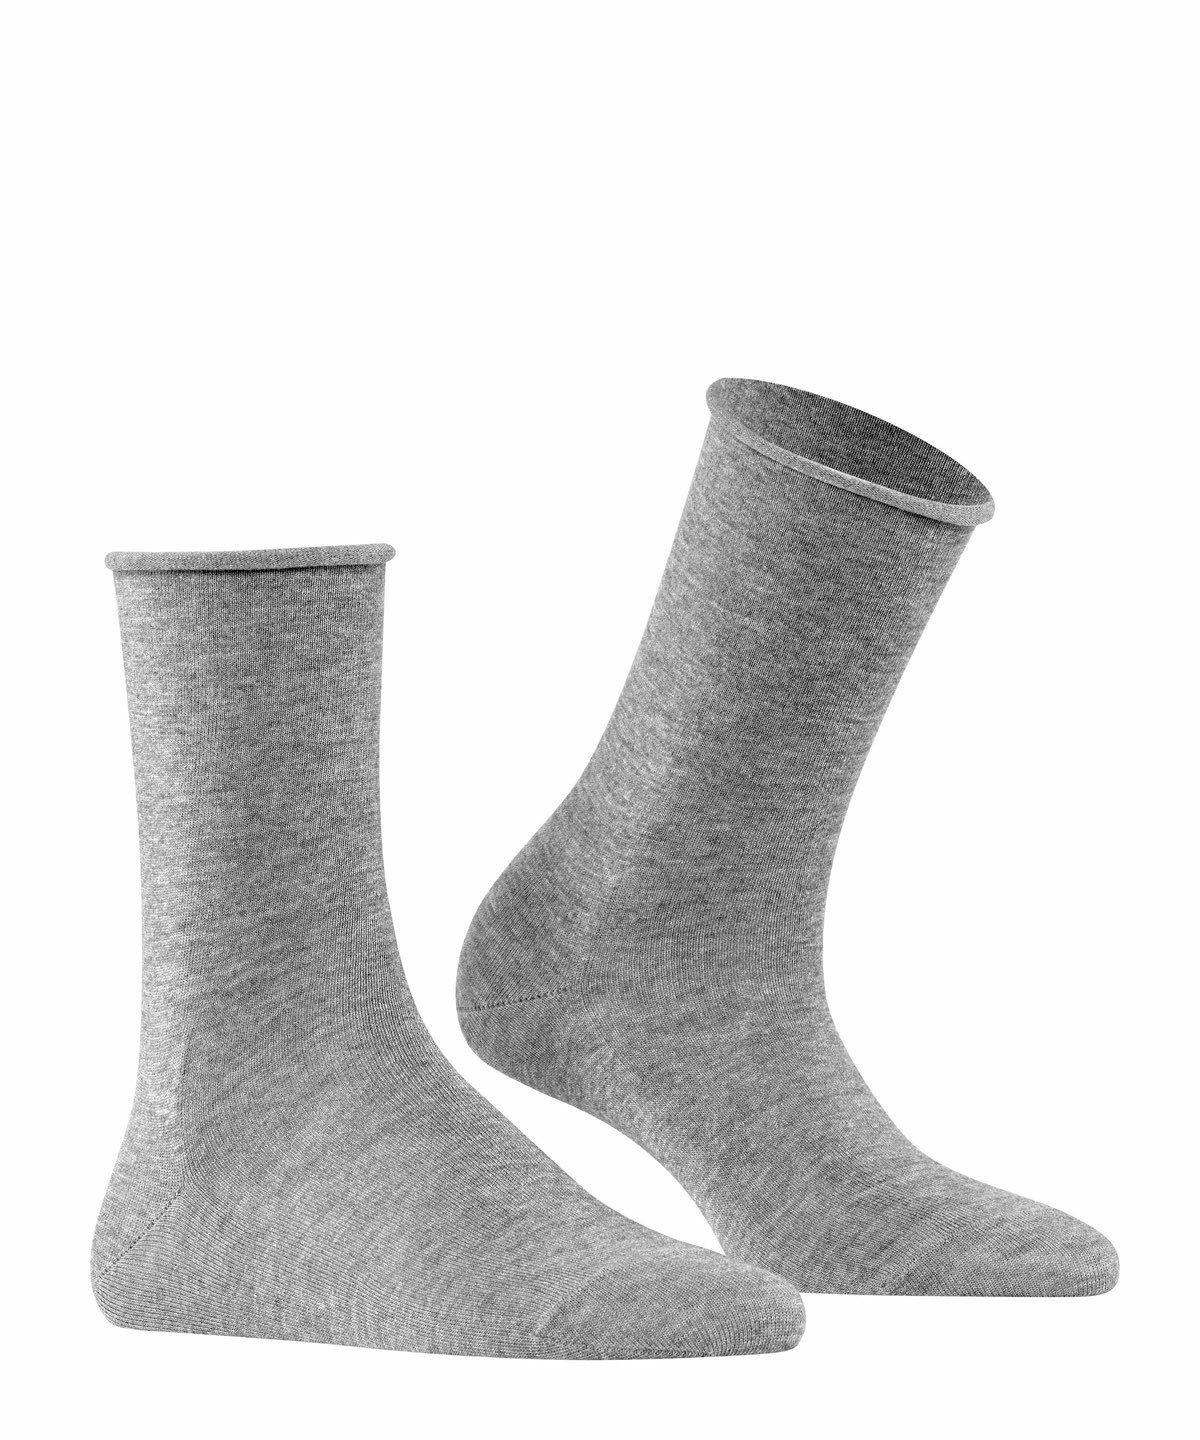 Breeze Grau Active - Damen FALKE Kurzsocken Socken Rollbündchen Uni,